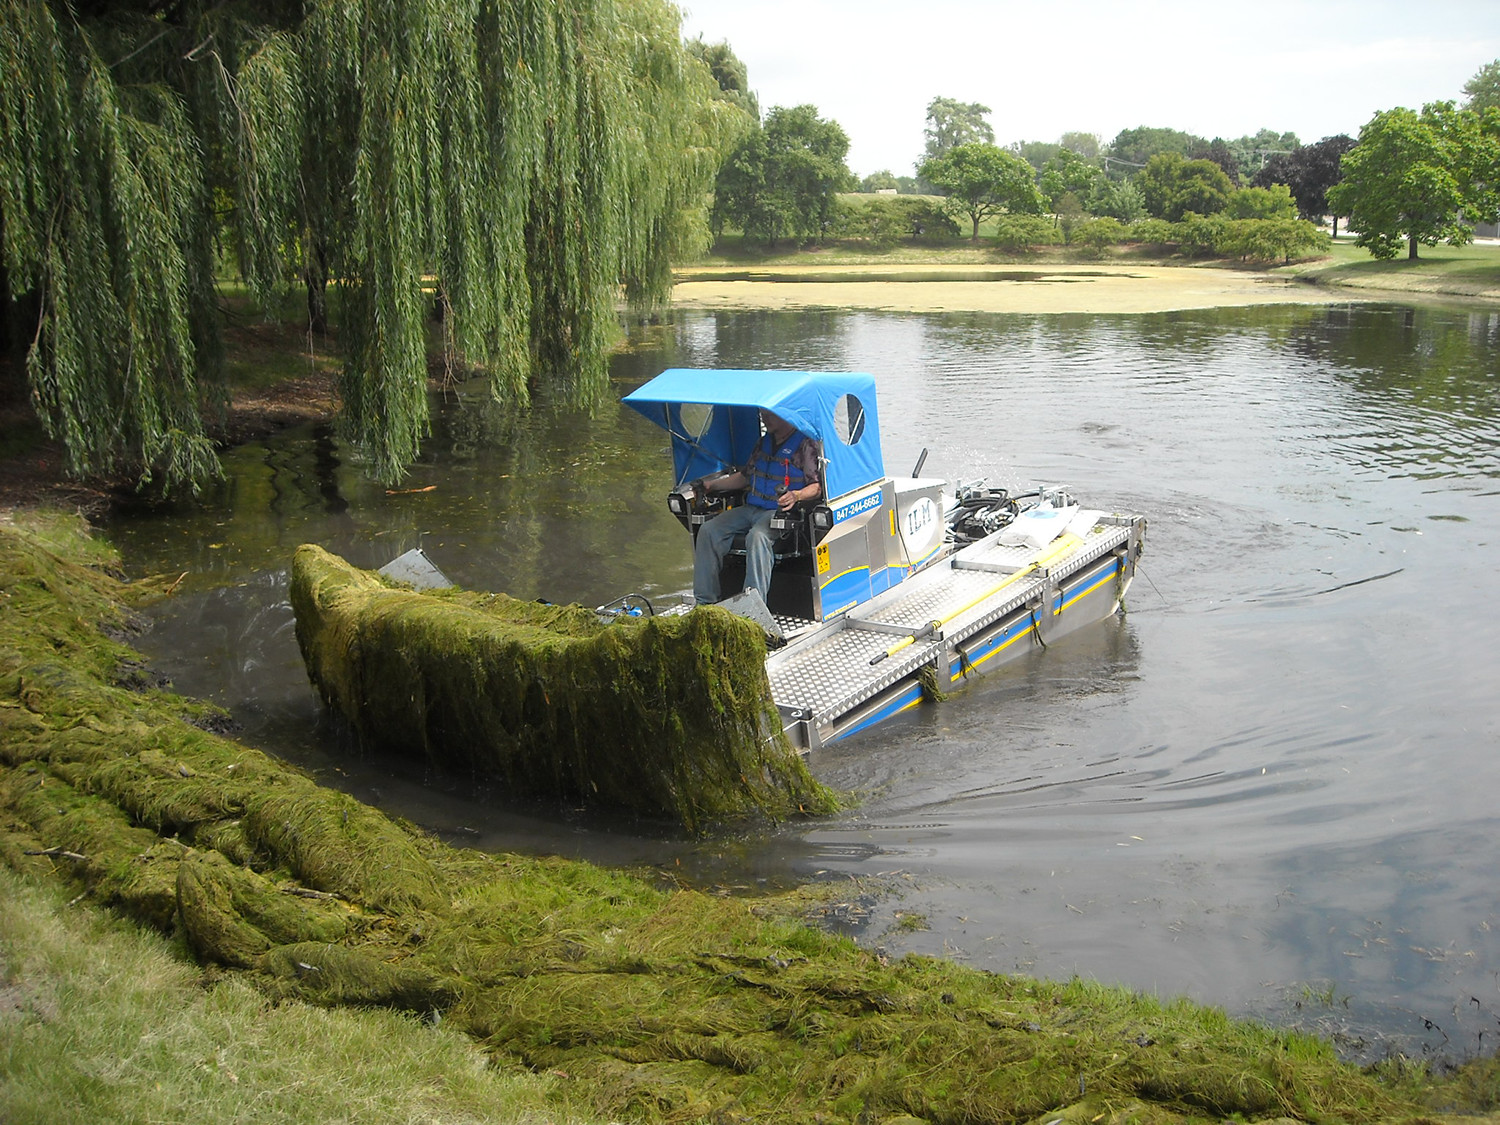 Fishing Manual Mower For Lake and River Algae